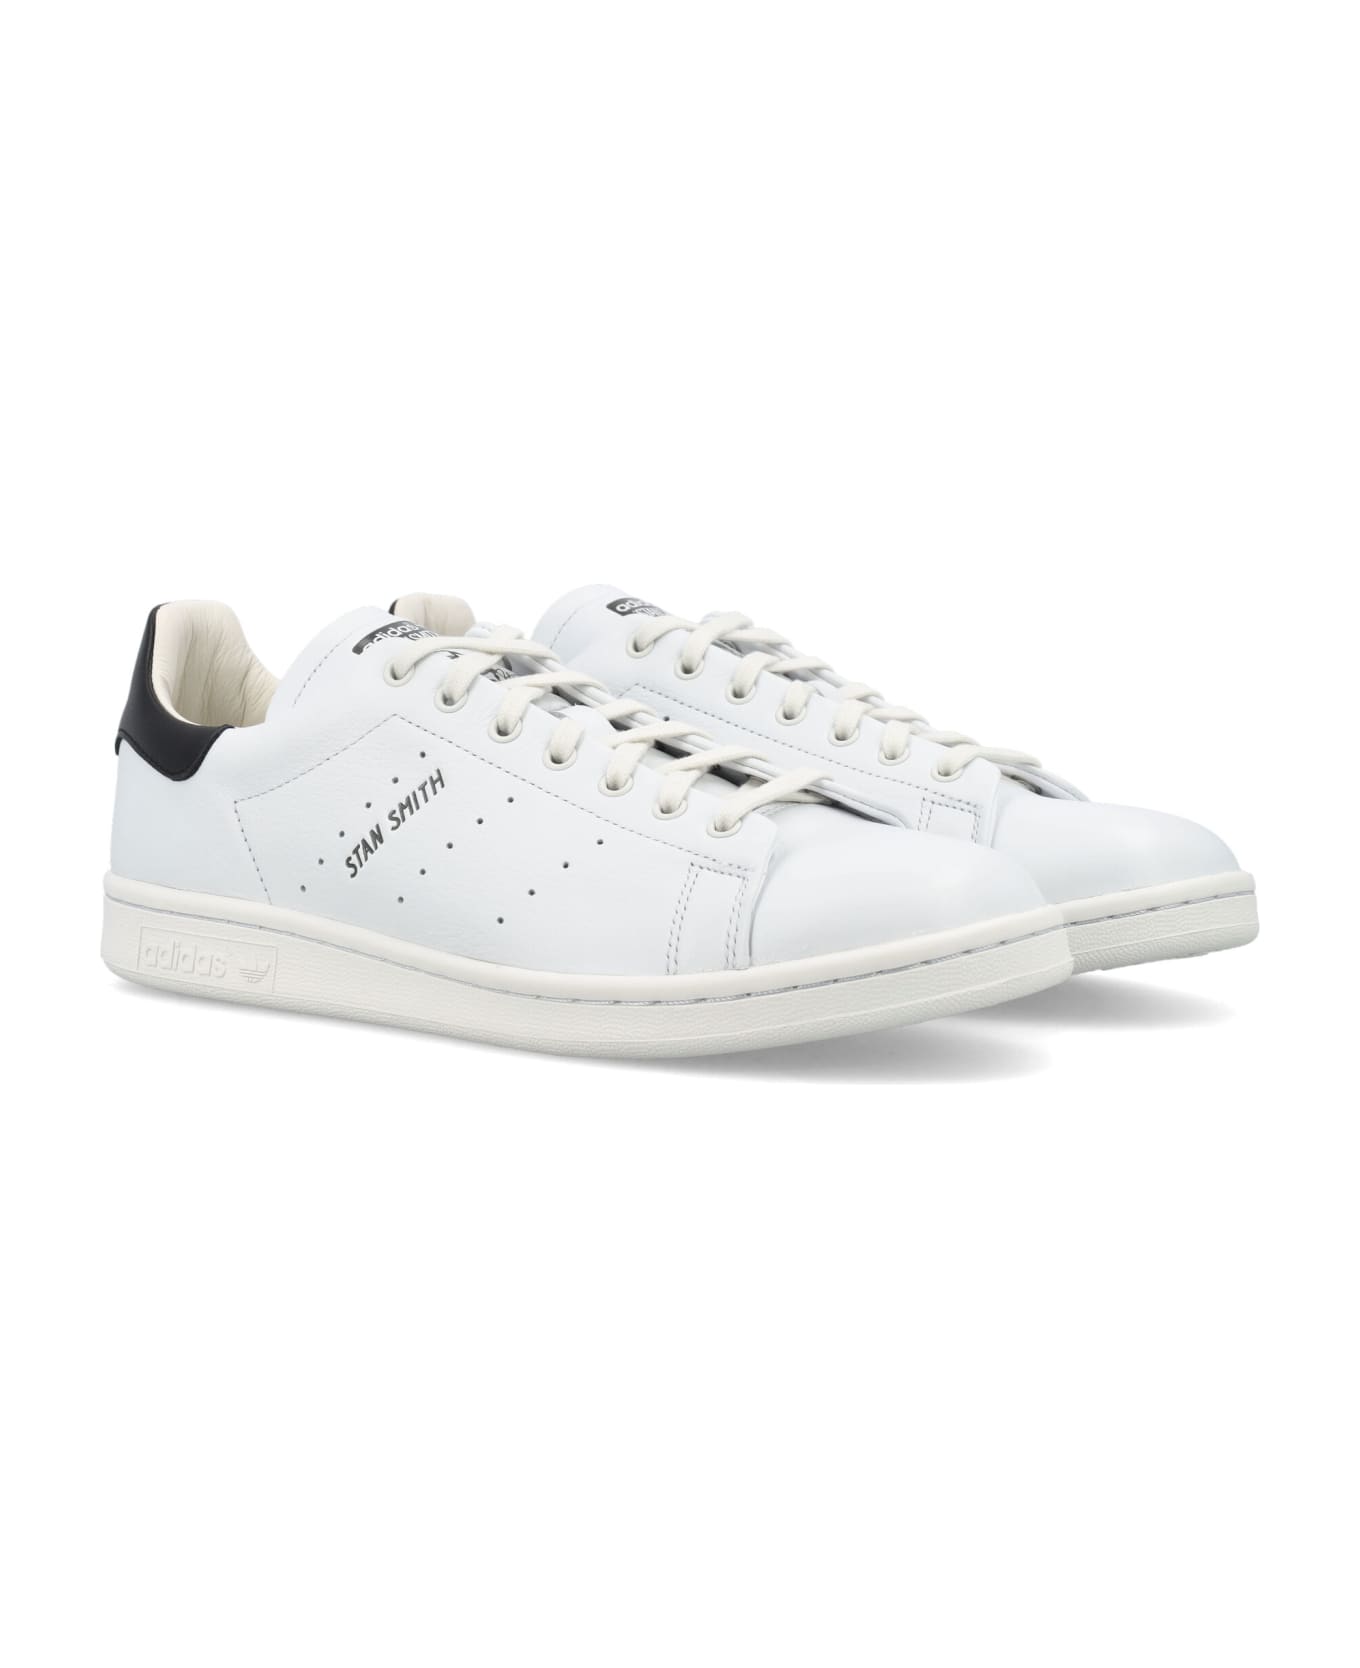 Adidas Originals Stan Smith Lux Sneakers - WHITE/BLACK